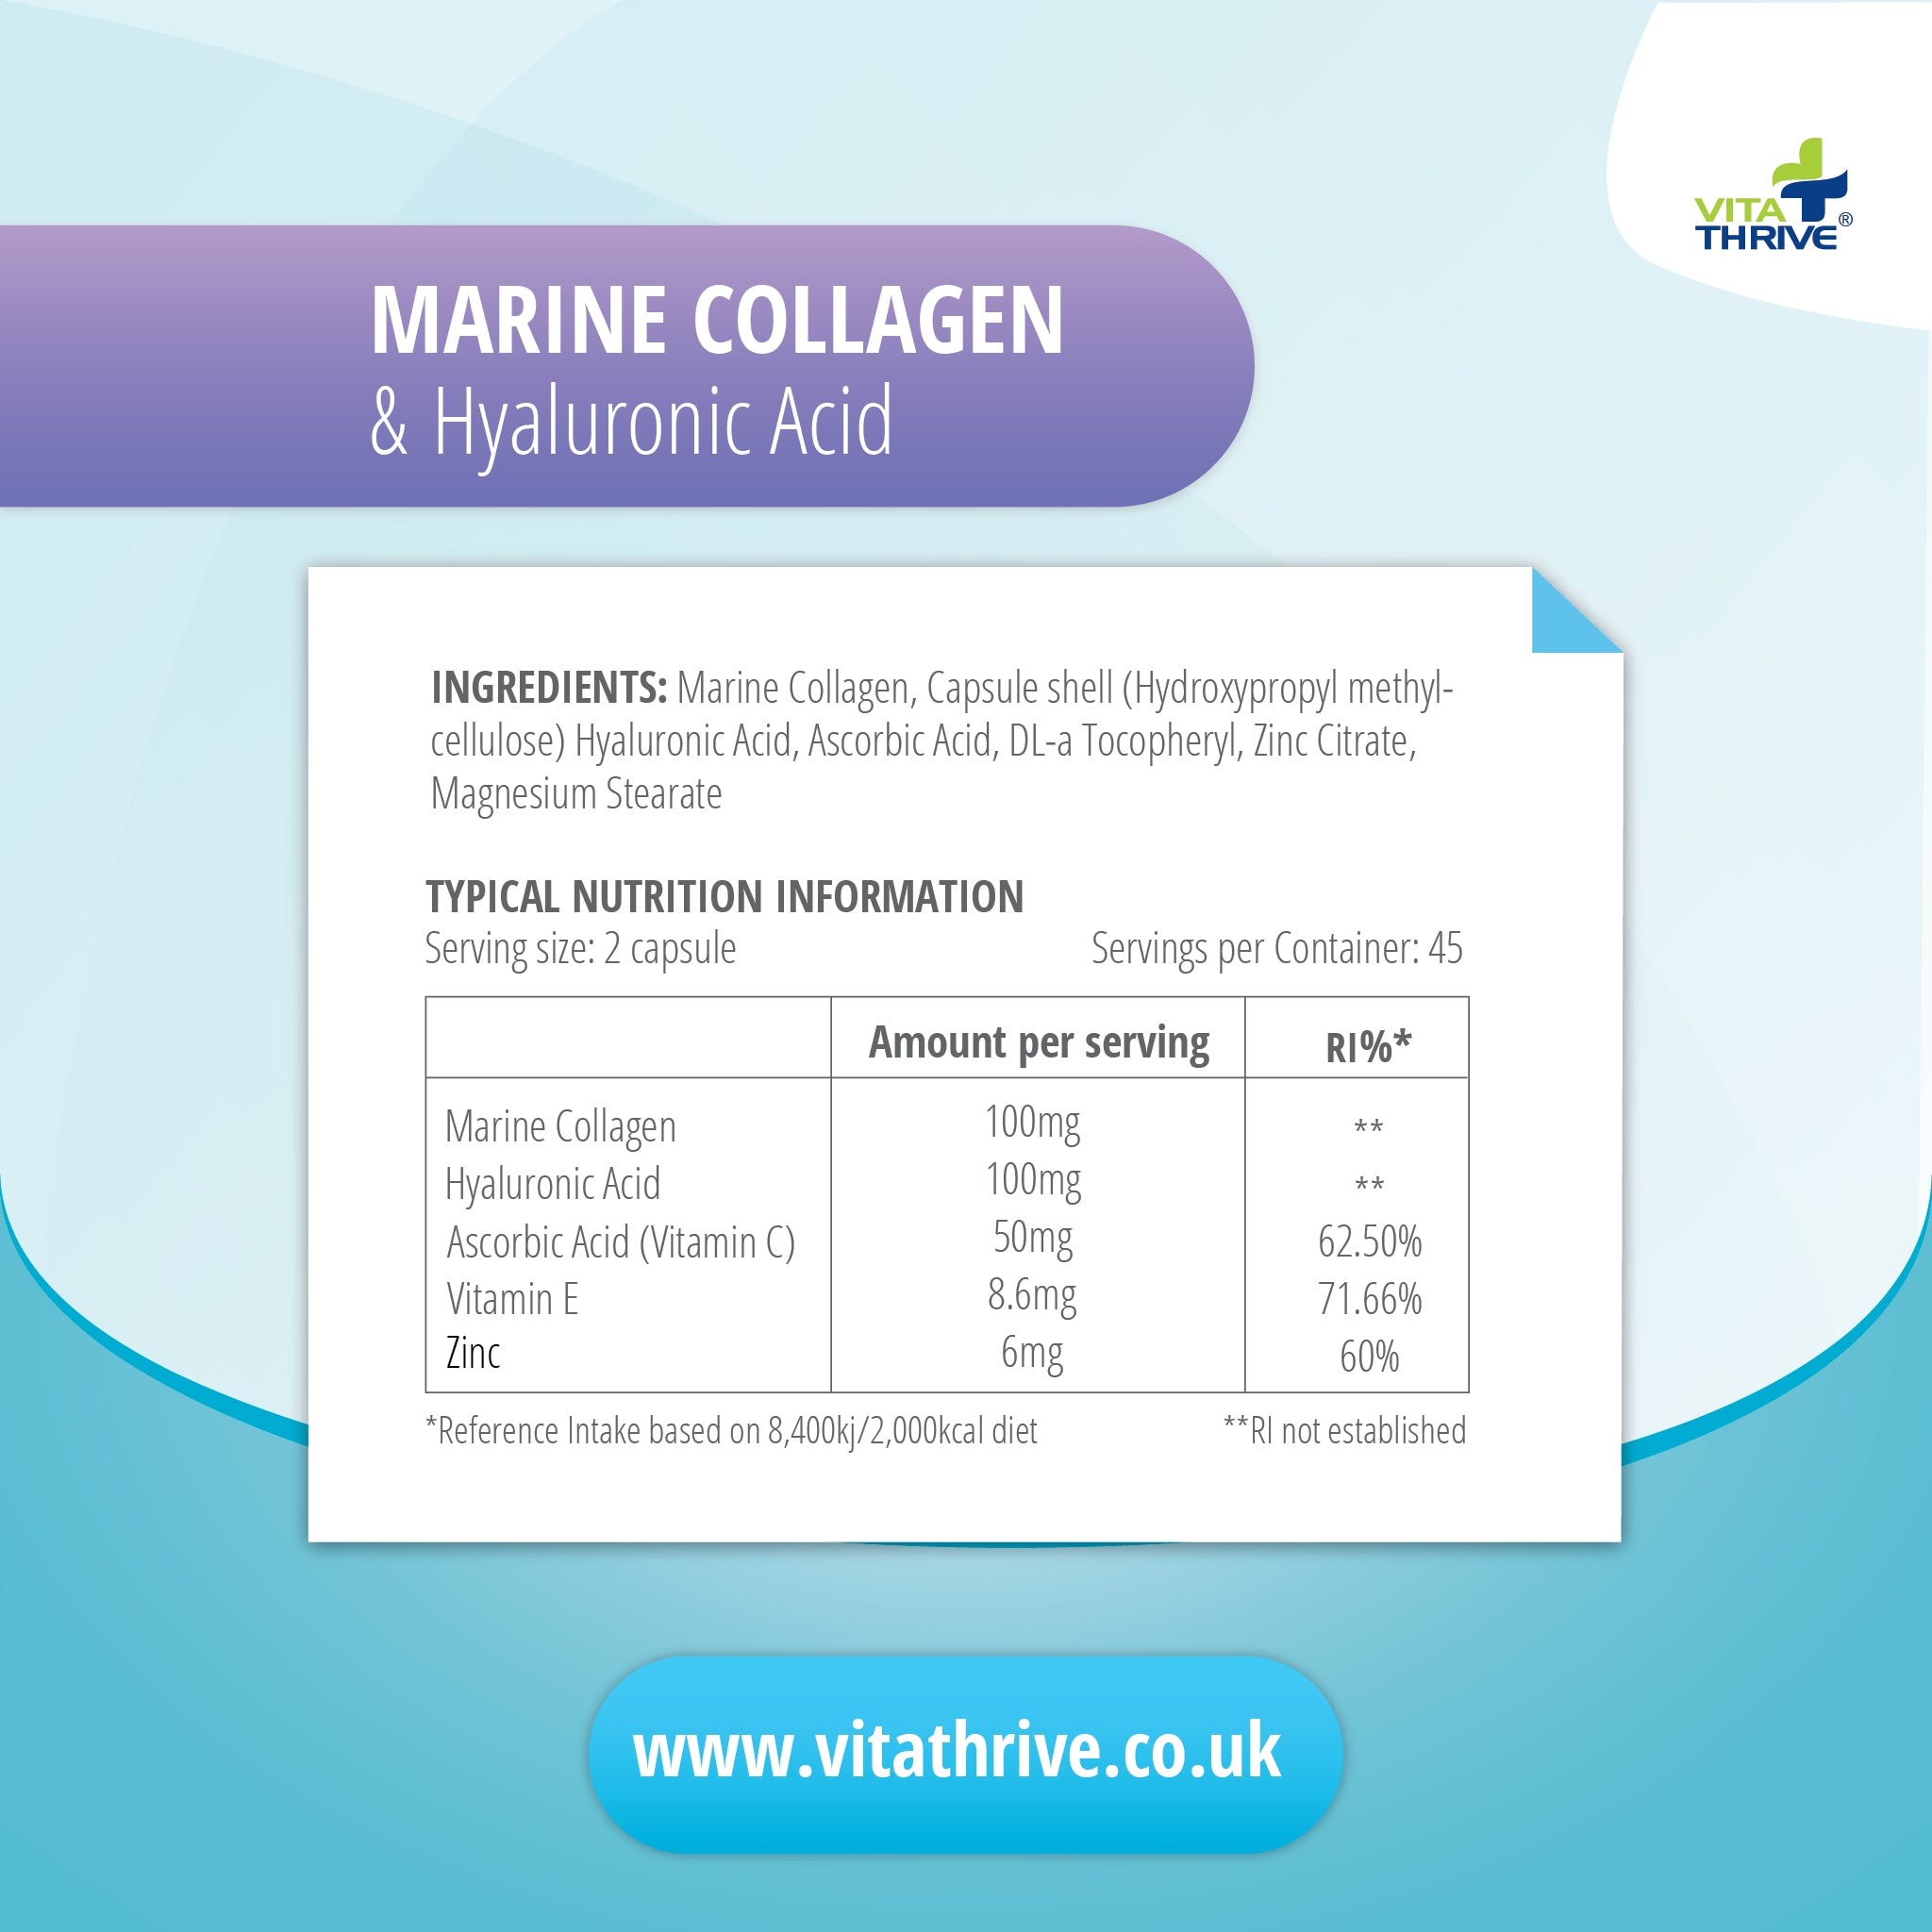 VitaThrive® Marine Collagen & Hyaluronic Acid - 90 Capsules